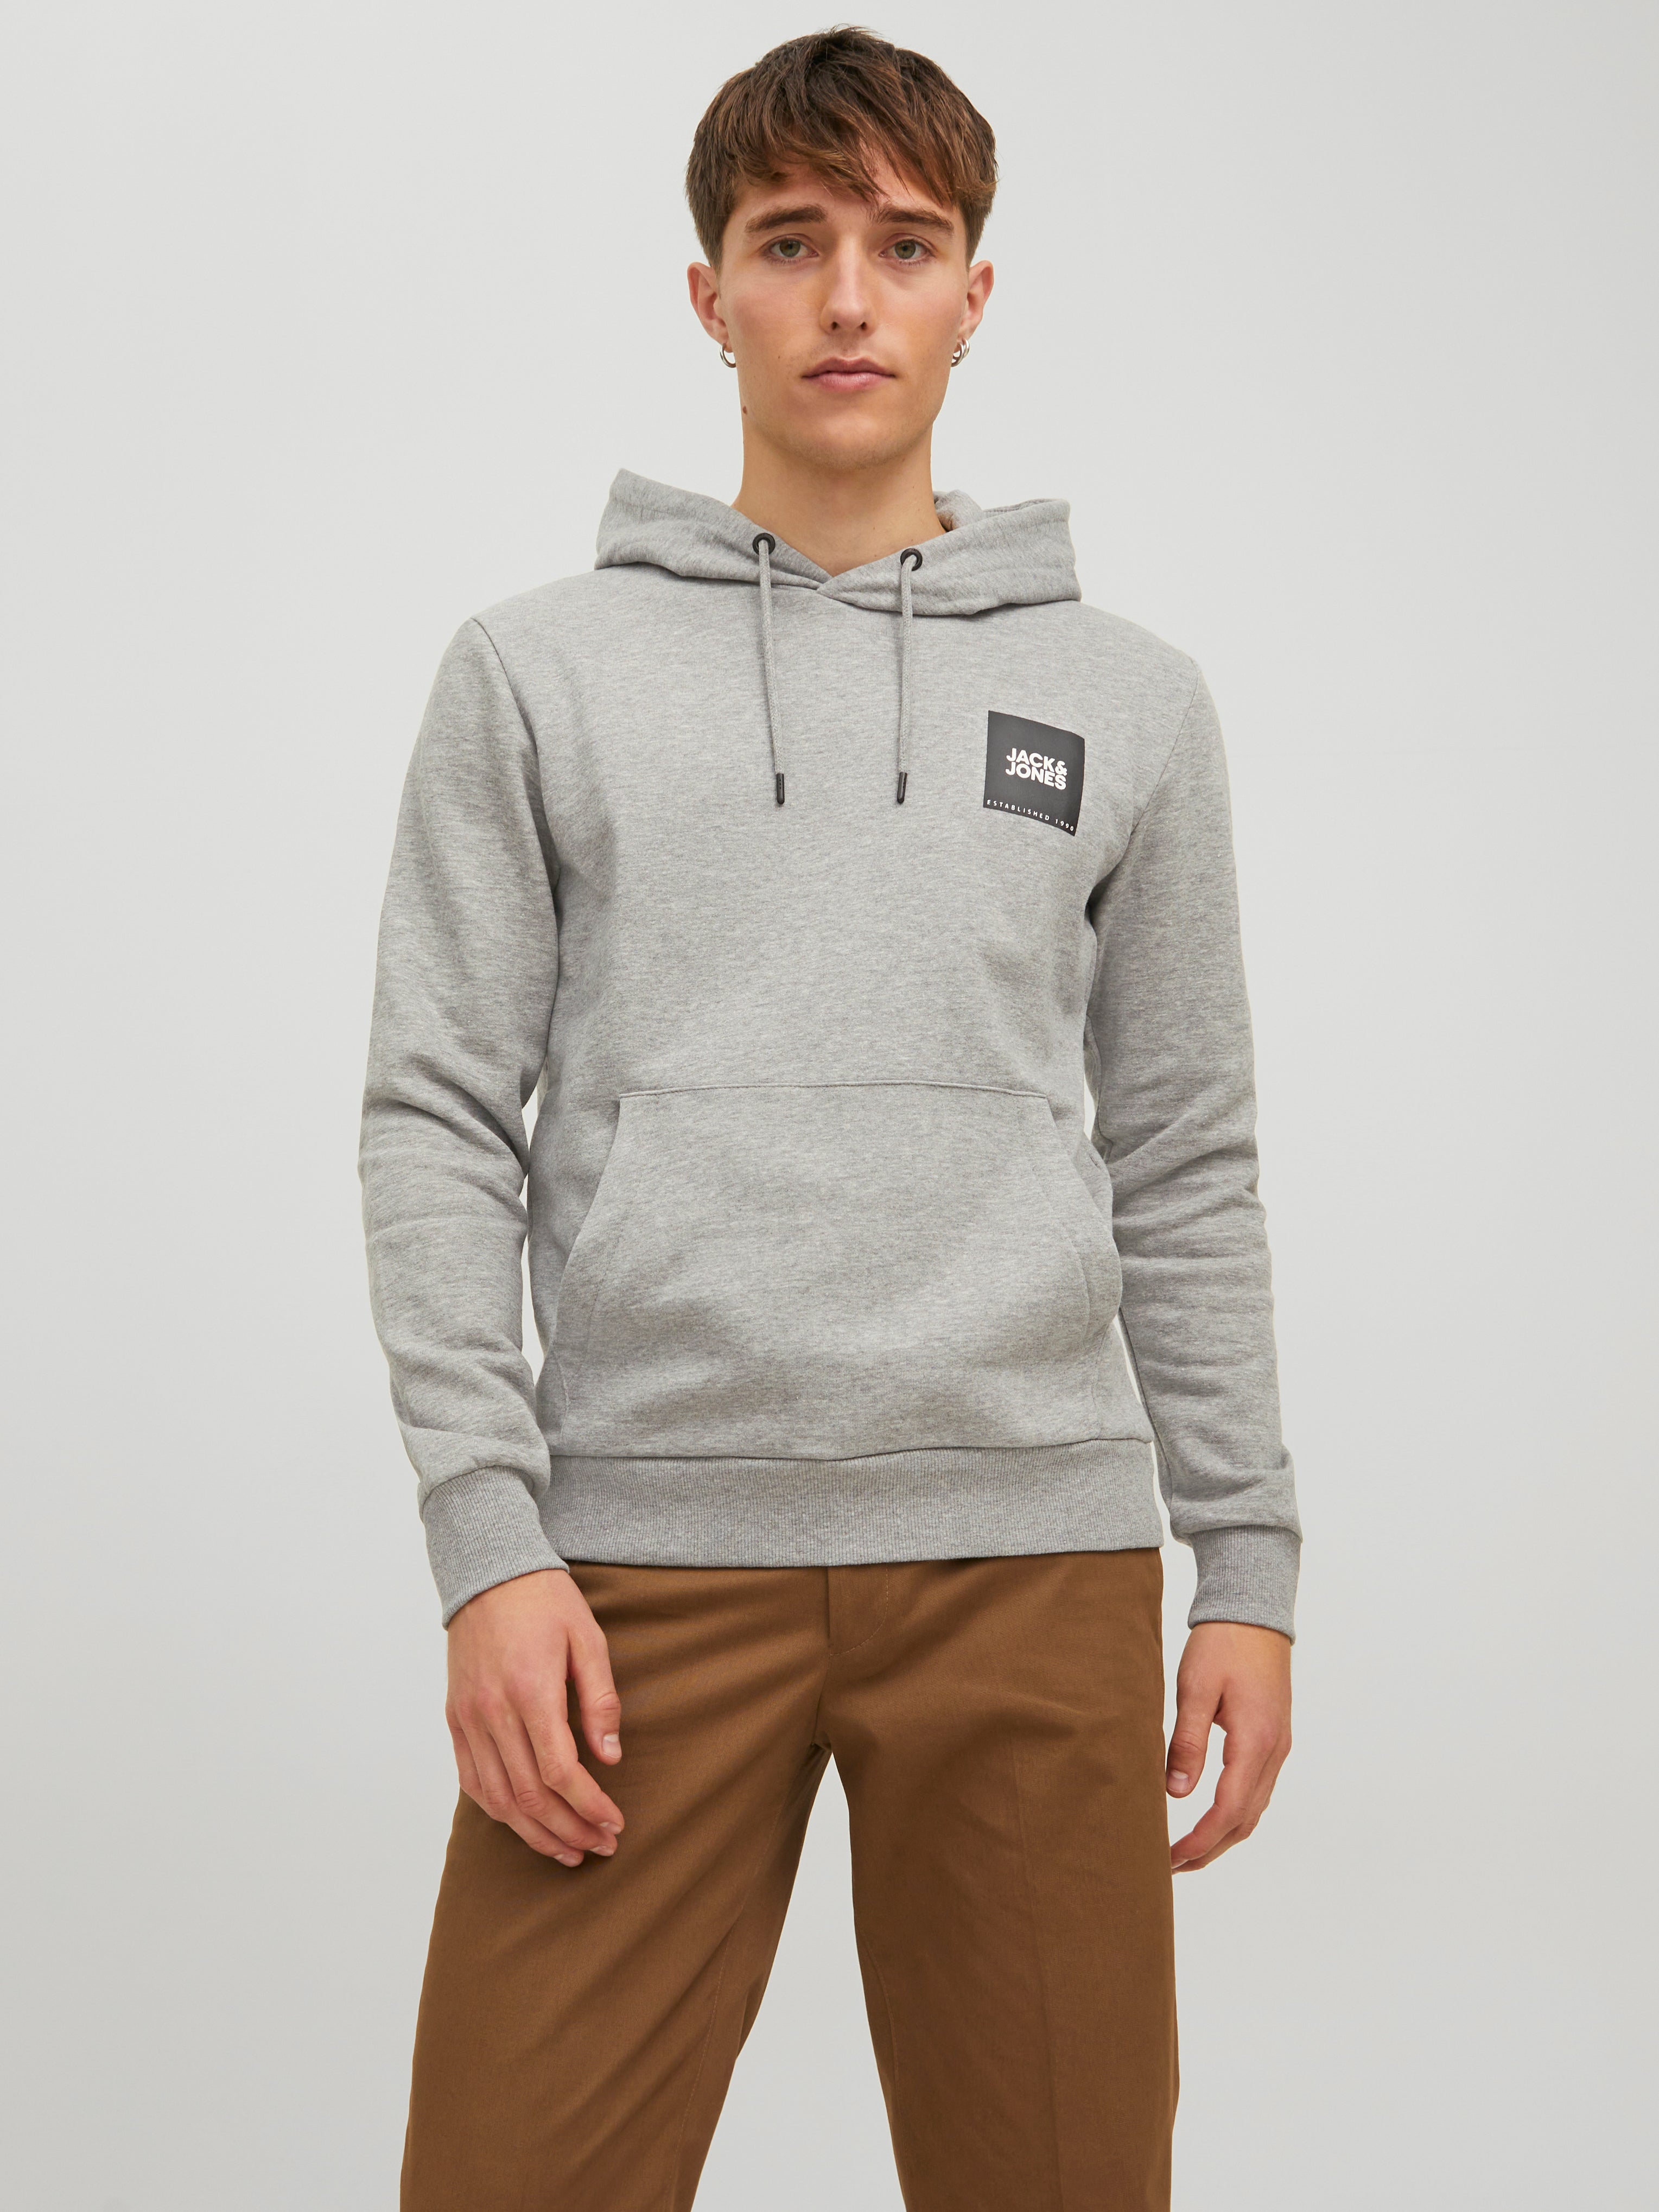 MEN FASHION Jumpers & Sweatshirts Hoodie Multicolored XL discount 56% Jack & Jones sweatshirt 